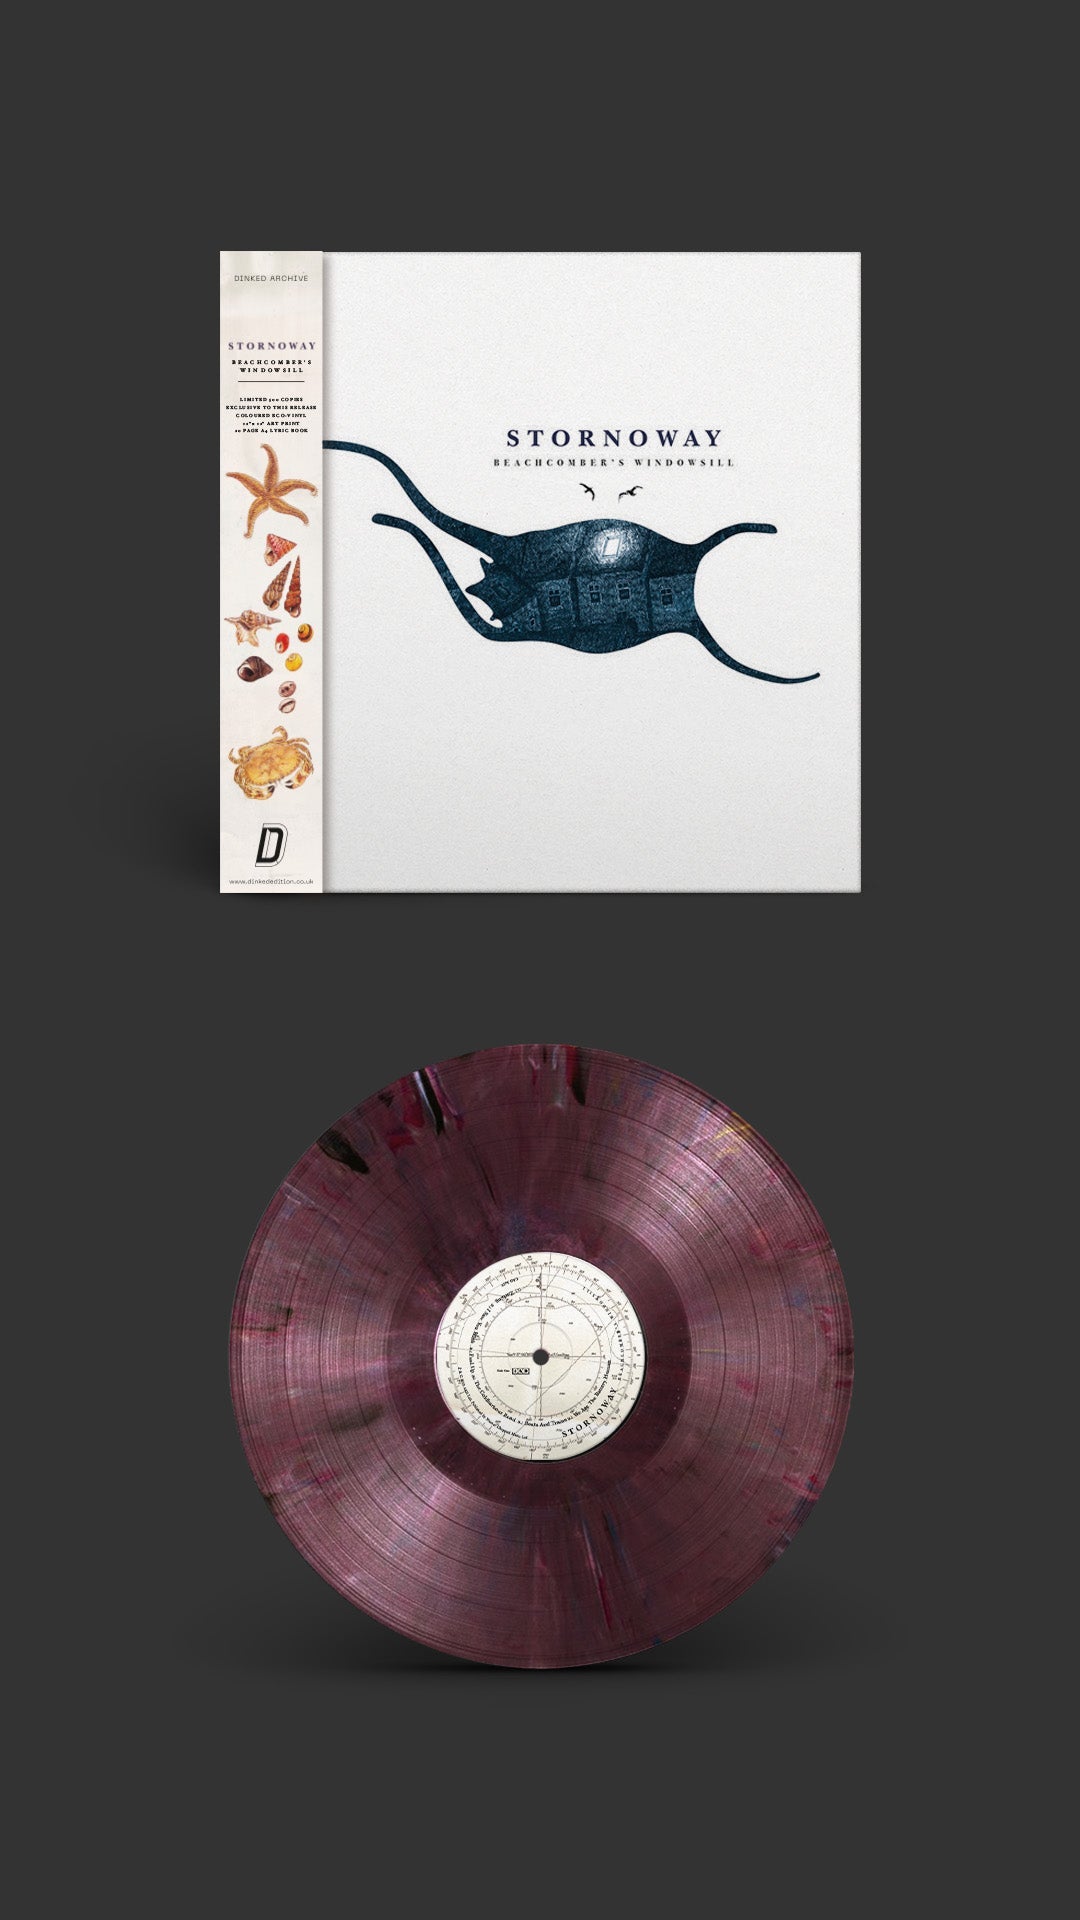 STORNOWAY - Beachcomber’s Windowsill - LP - Vinyl - Dinked Archive Edition #15